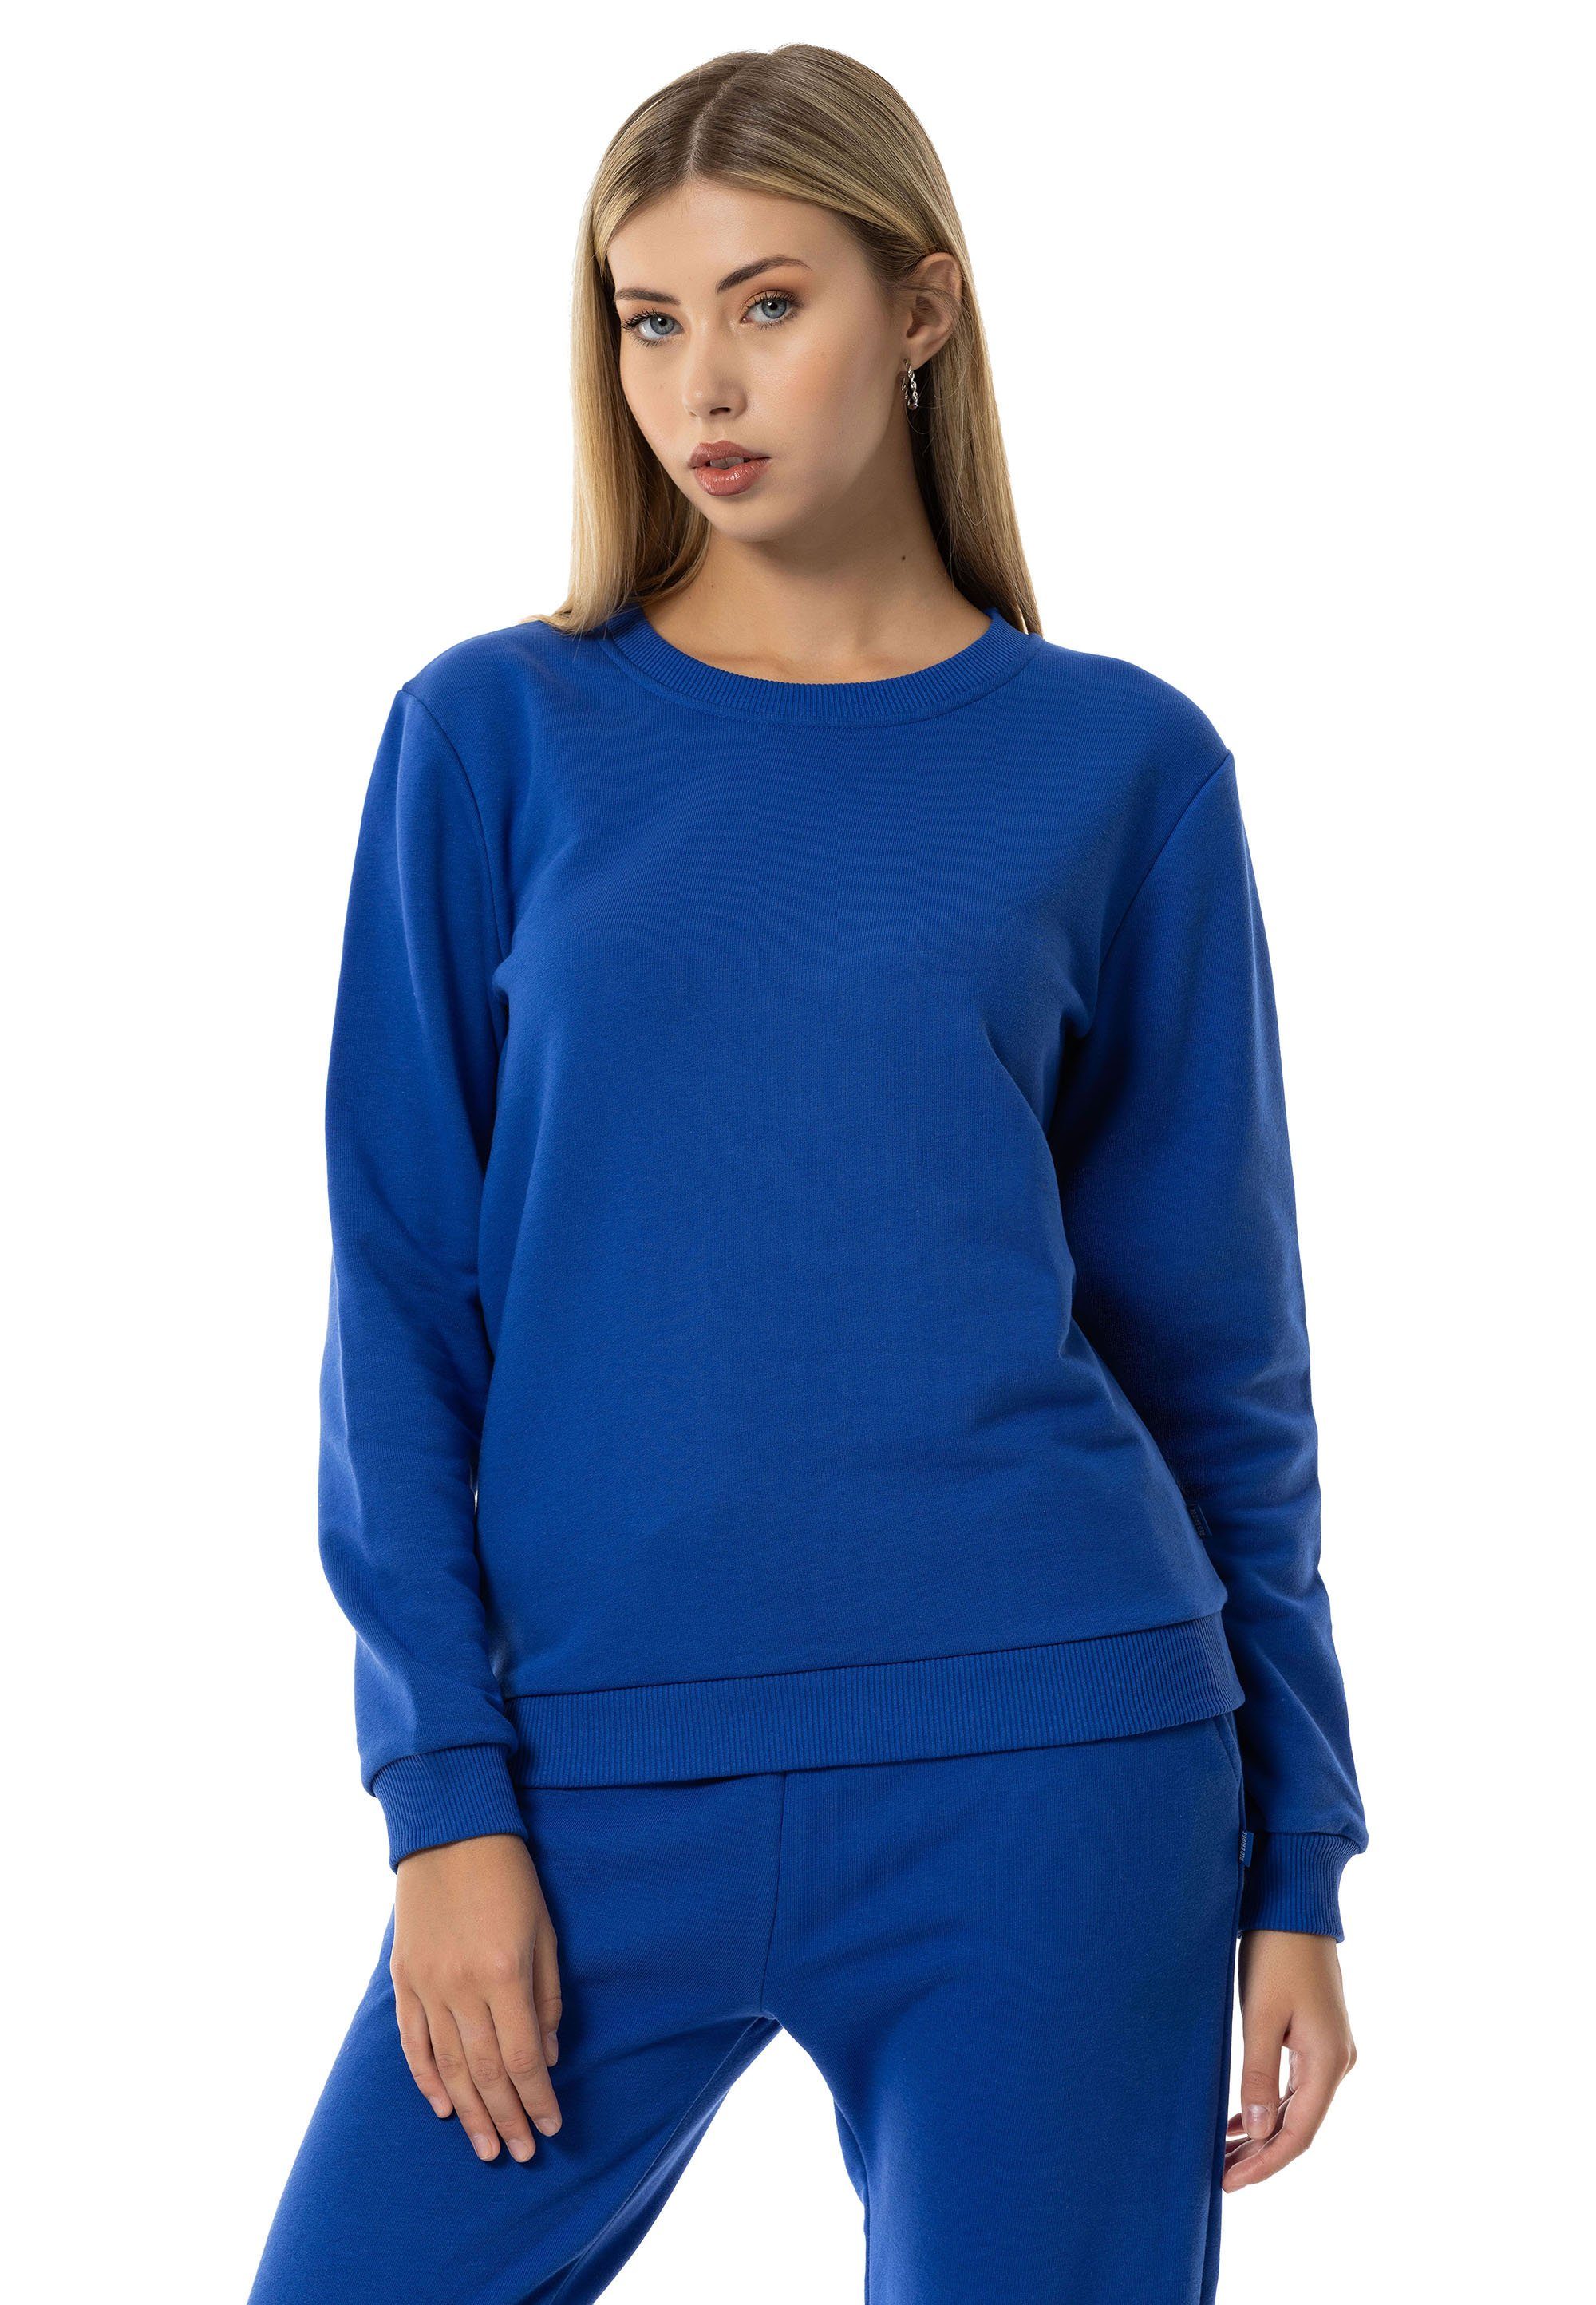 RedBridge Sweatshirt Rundhals Pullover Premium Qualität Saxeblau